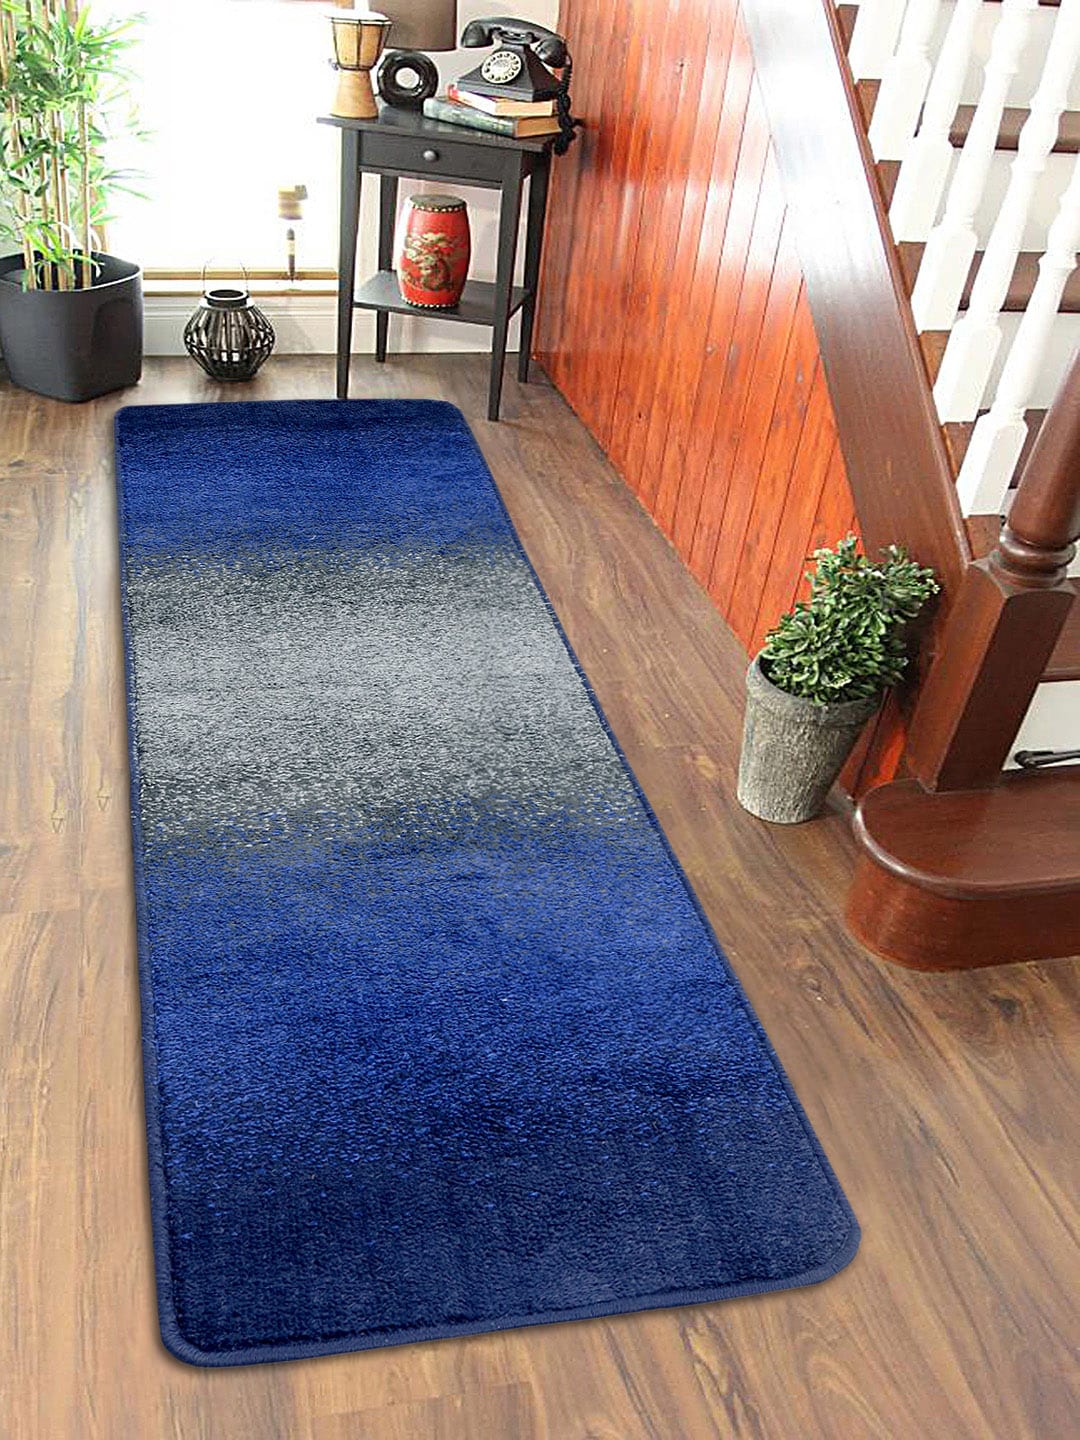 Saral Home Blue & Grey Printed Anti-Skid Floor Runner Price in India